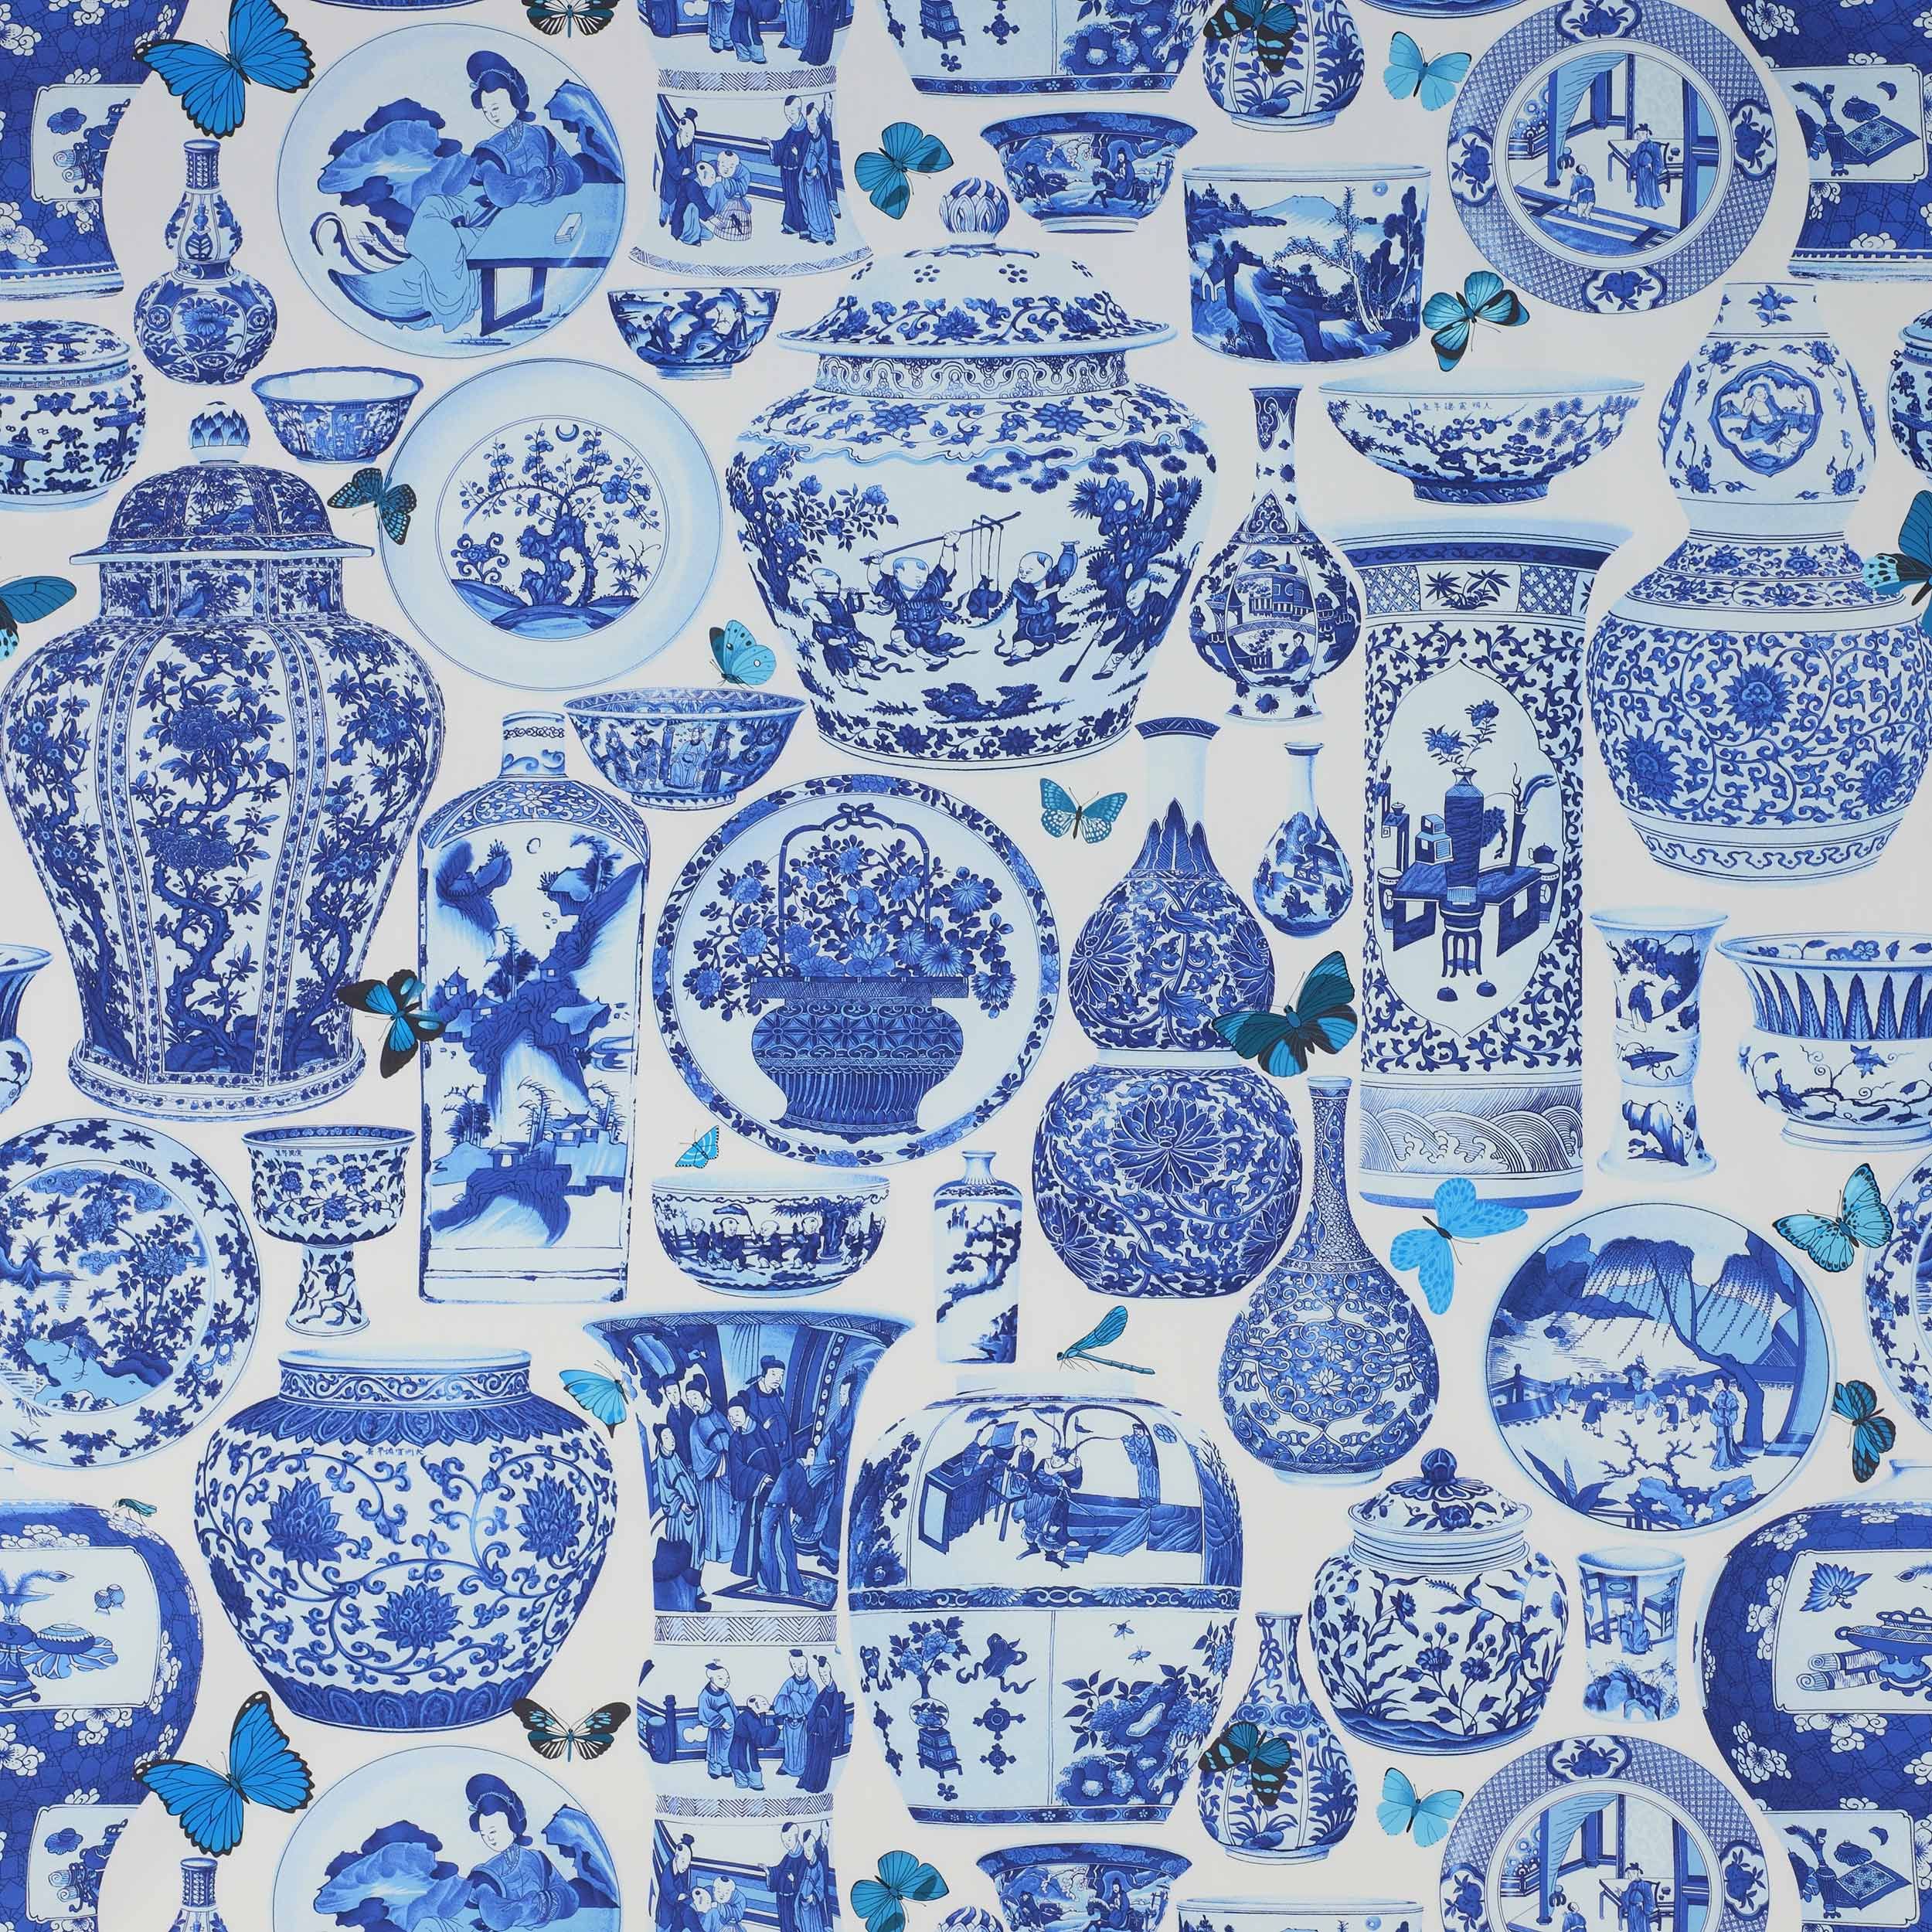 willow pattern wallpaper,blue and white porcelain,porcelain,blue,pattern,design